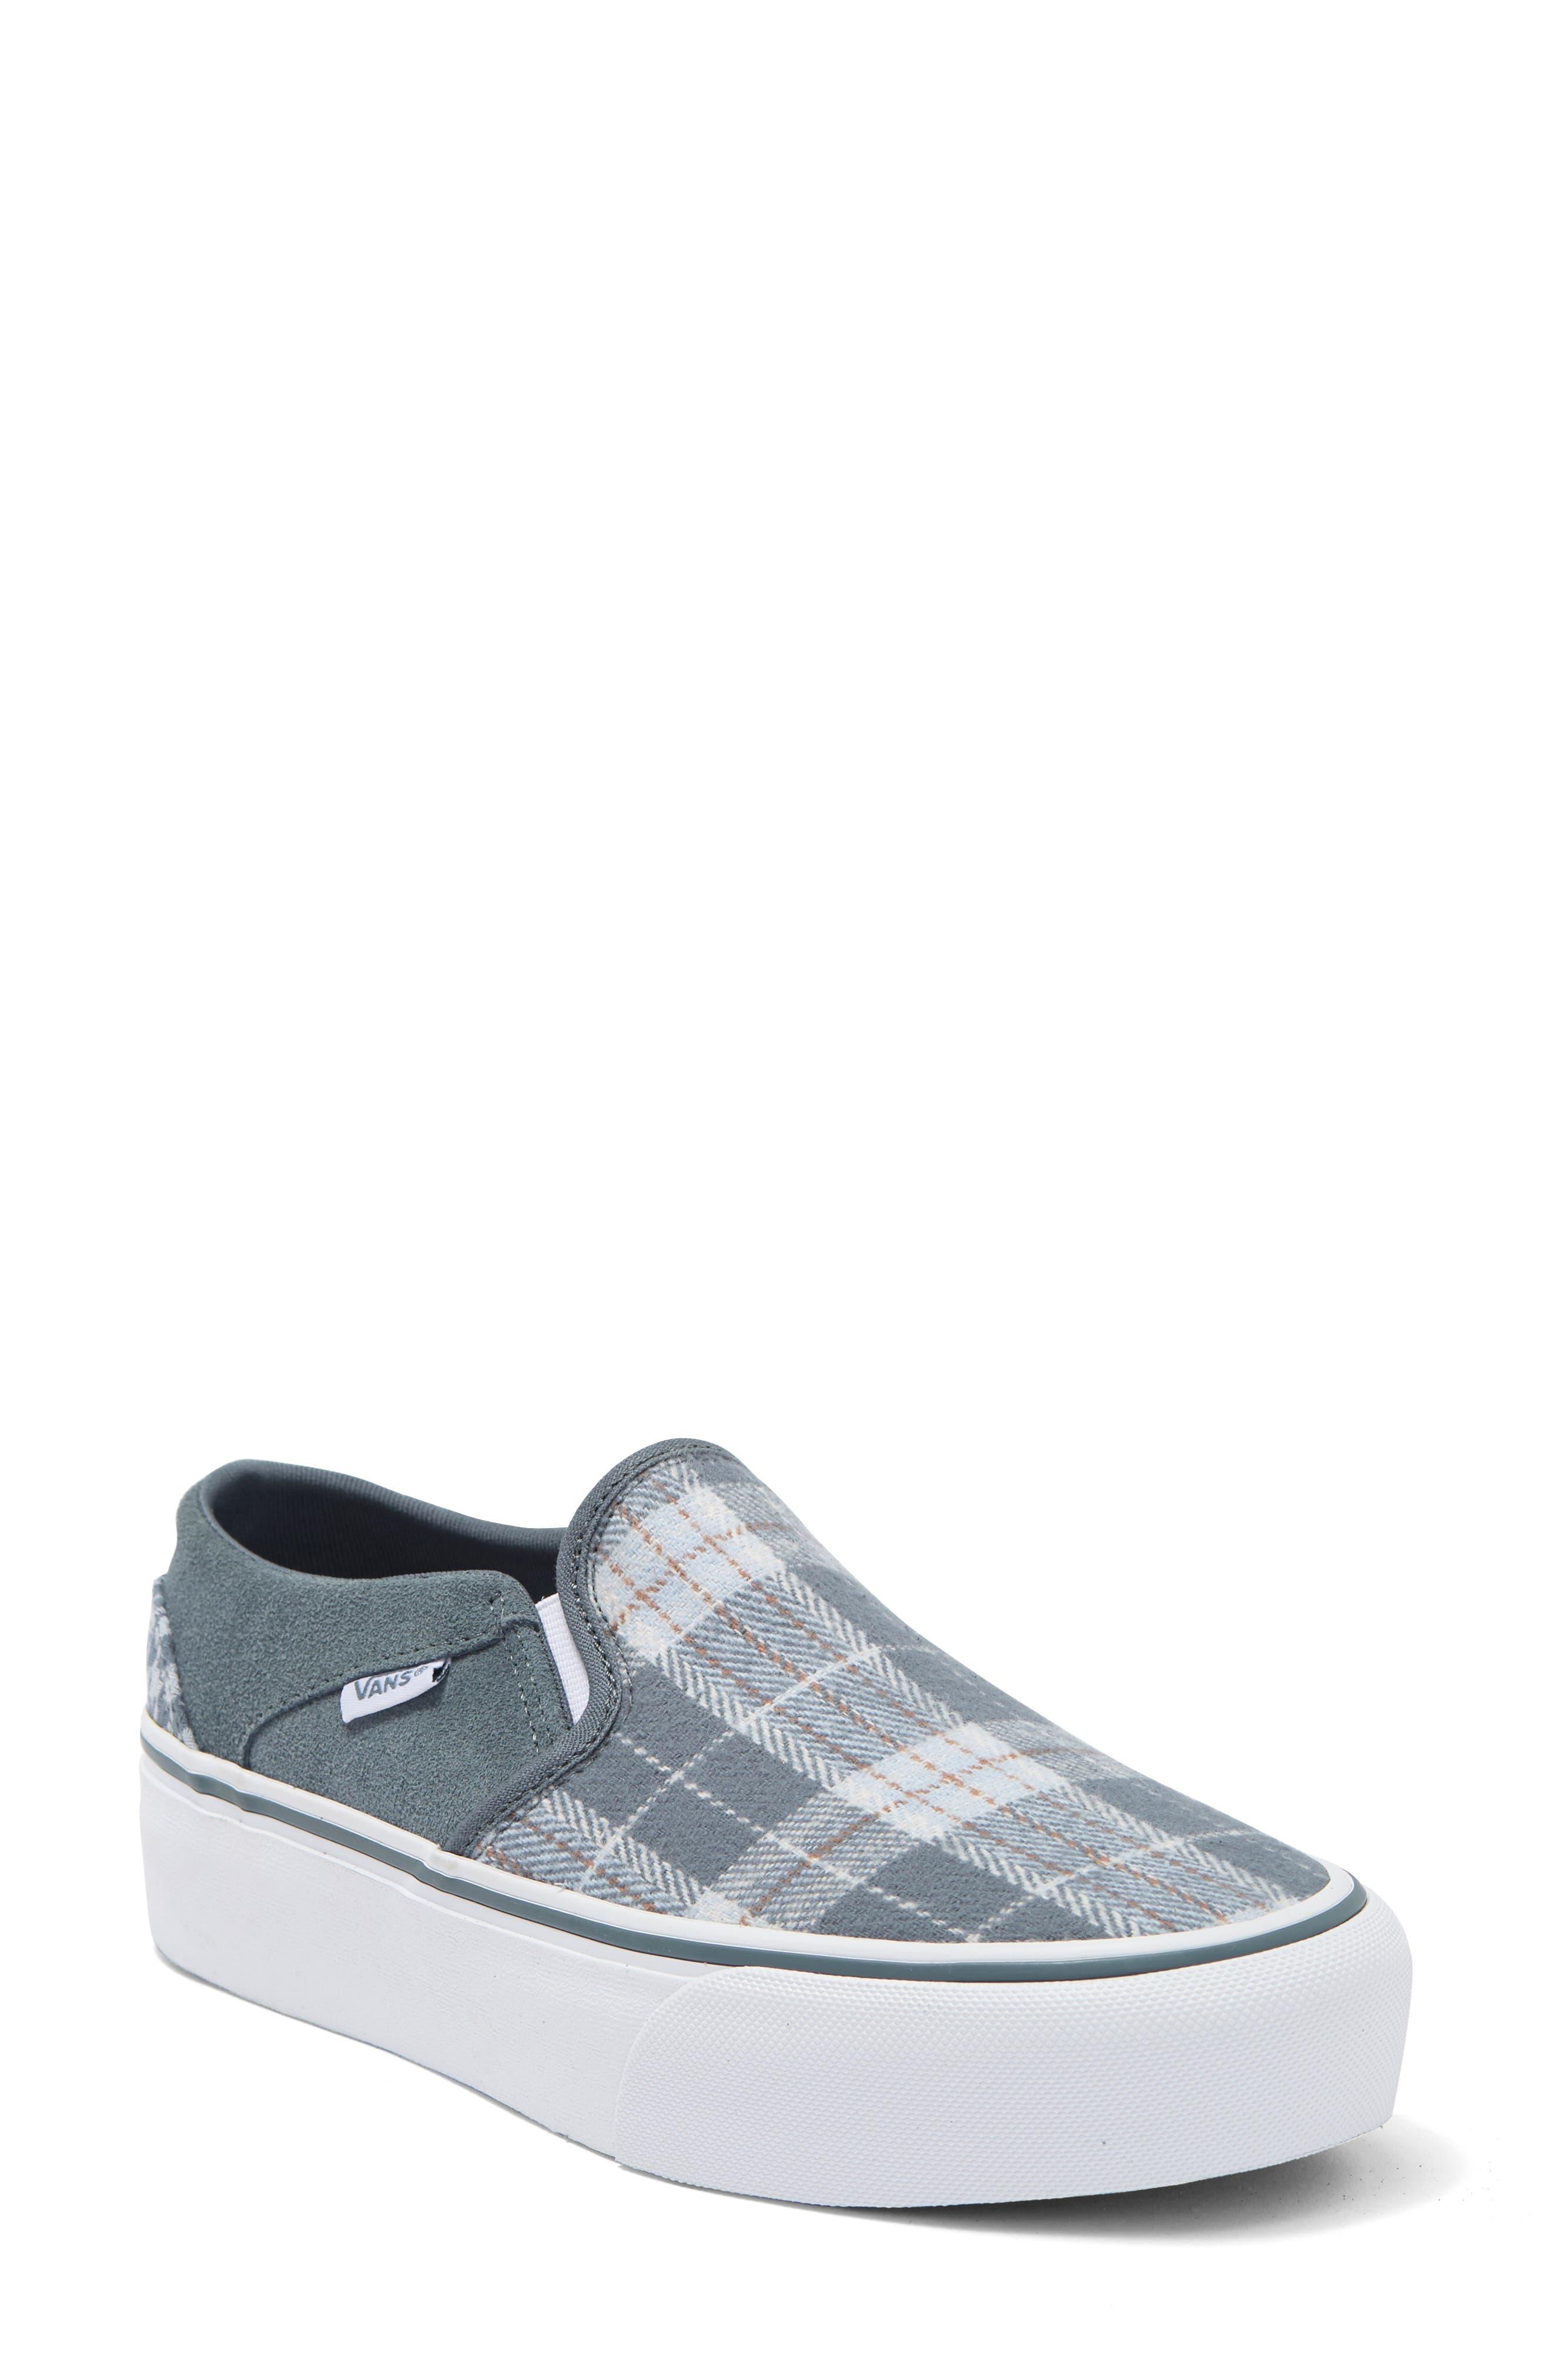 Vans Asher Platform Slip-on Sneaker In Plaid Mix Dark Grey At Nordstrom  Rack in Gray | Lyst